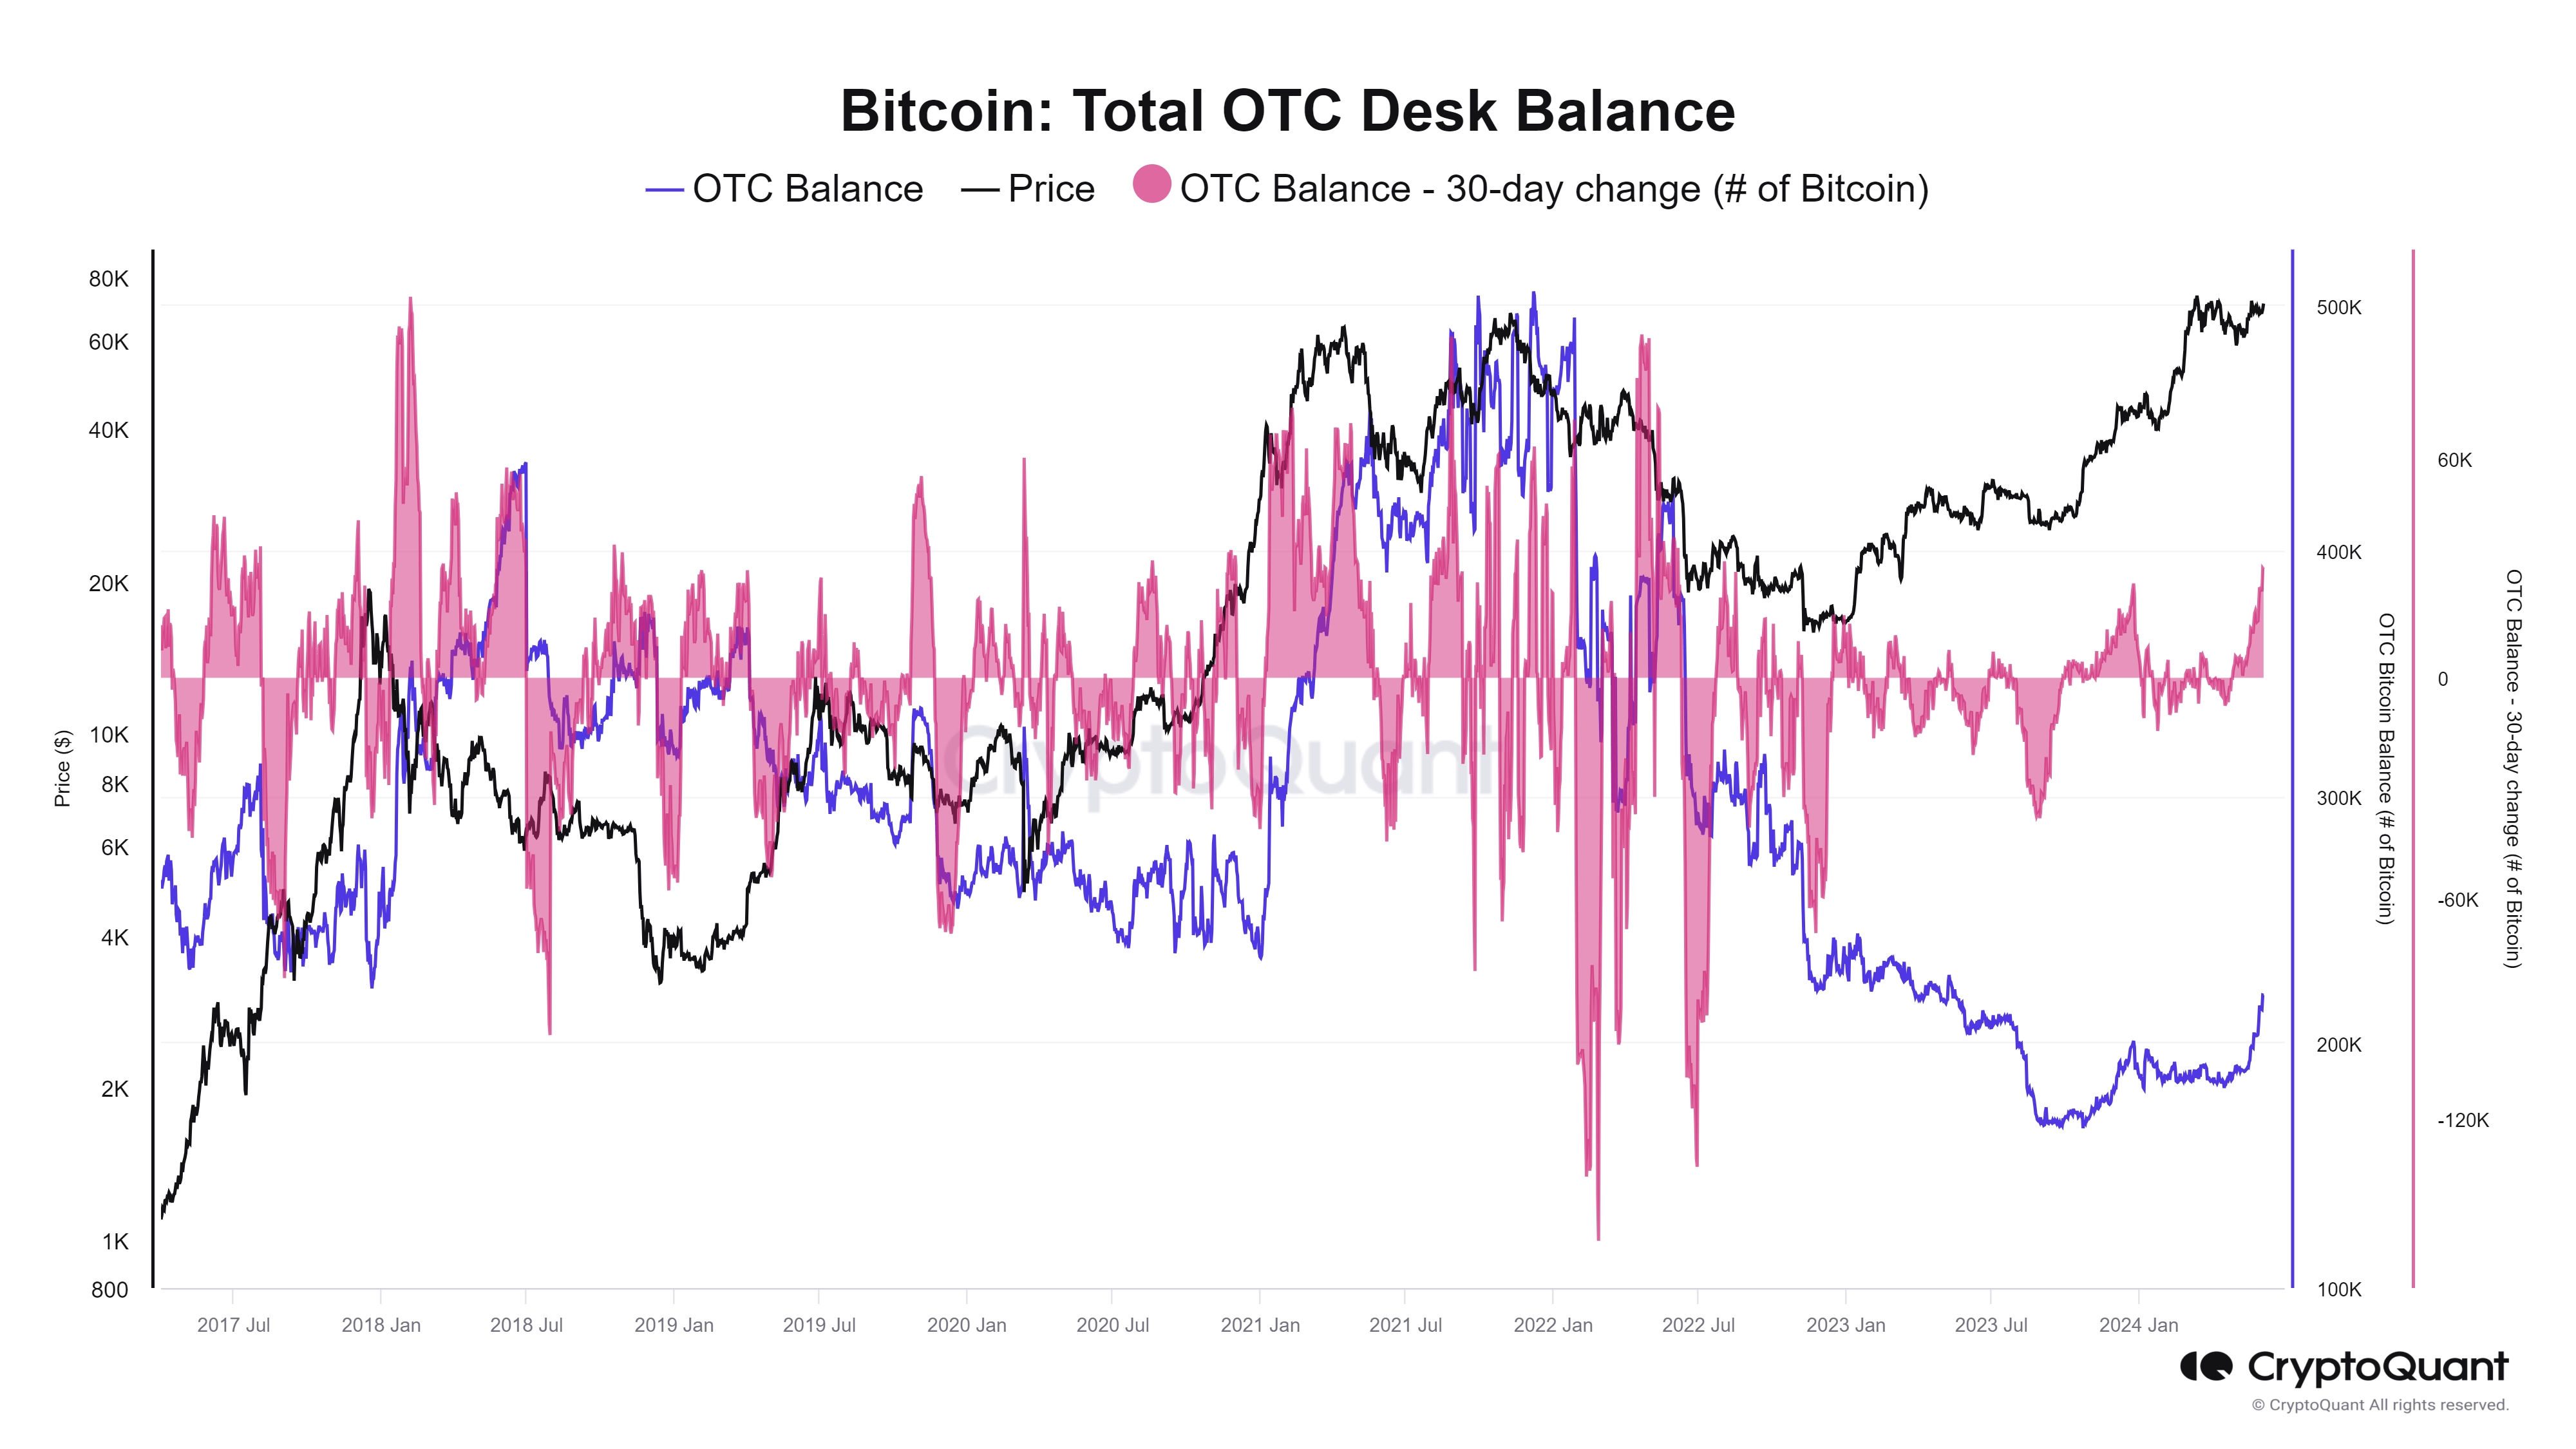 Bitcoin balances on OTC desks surge by 30,000 BTC in May